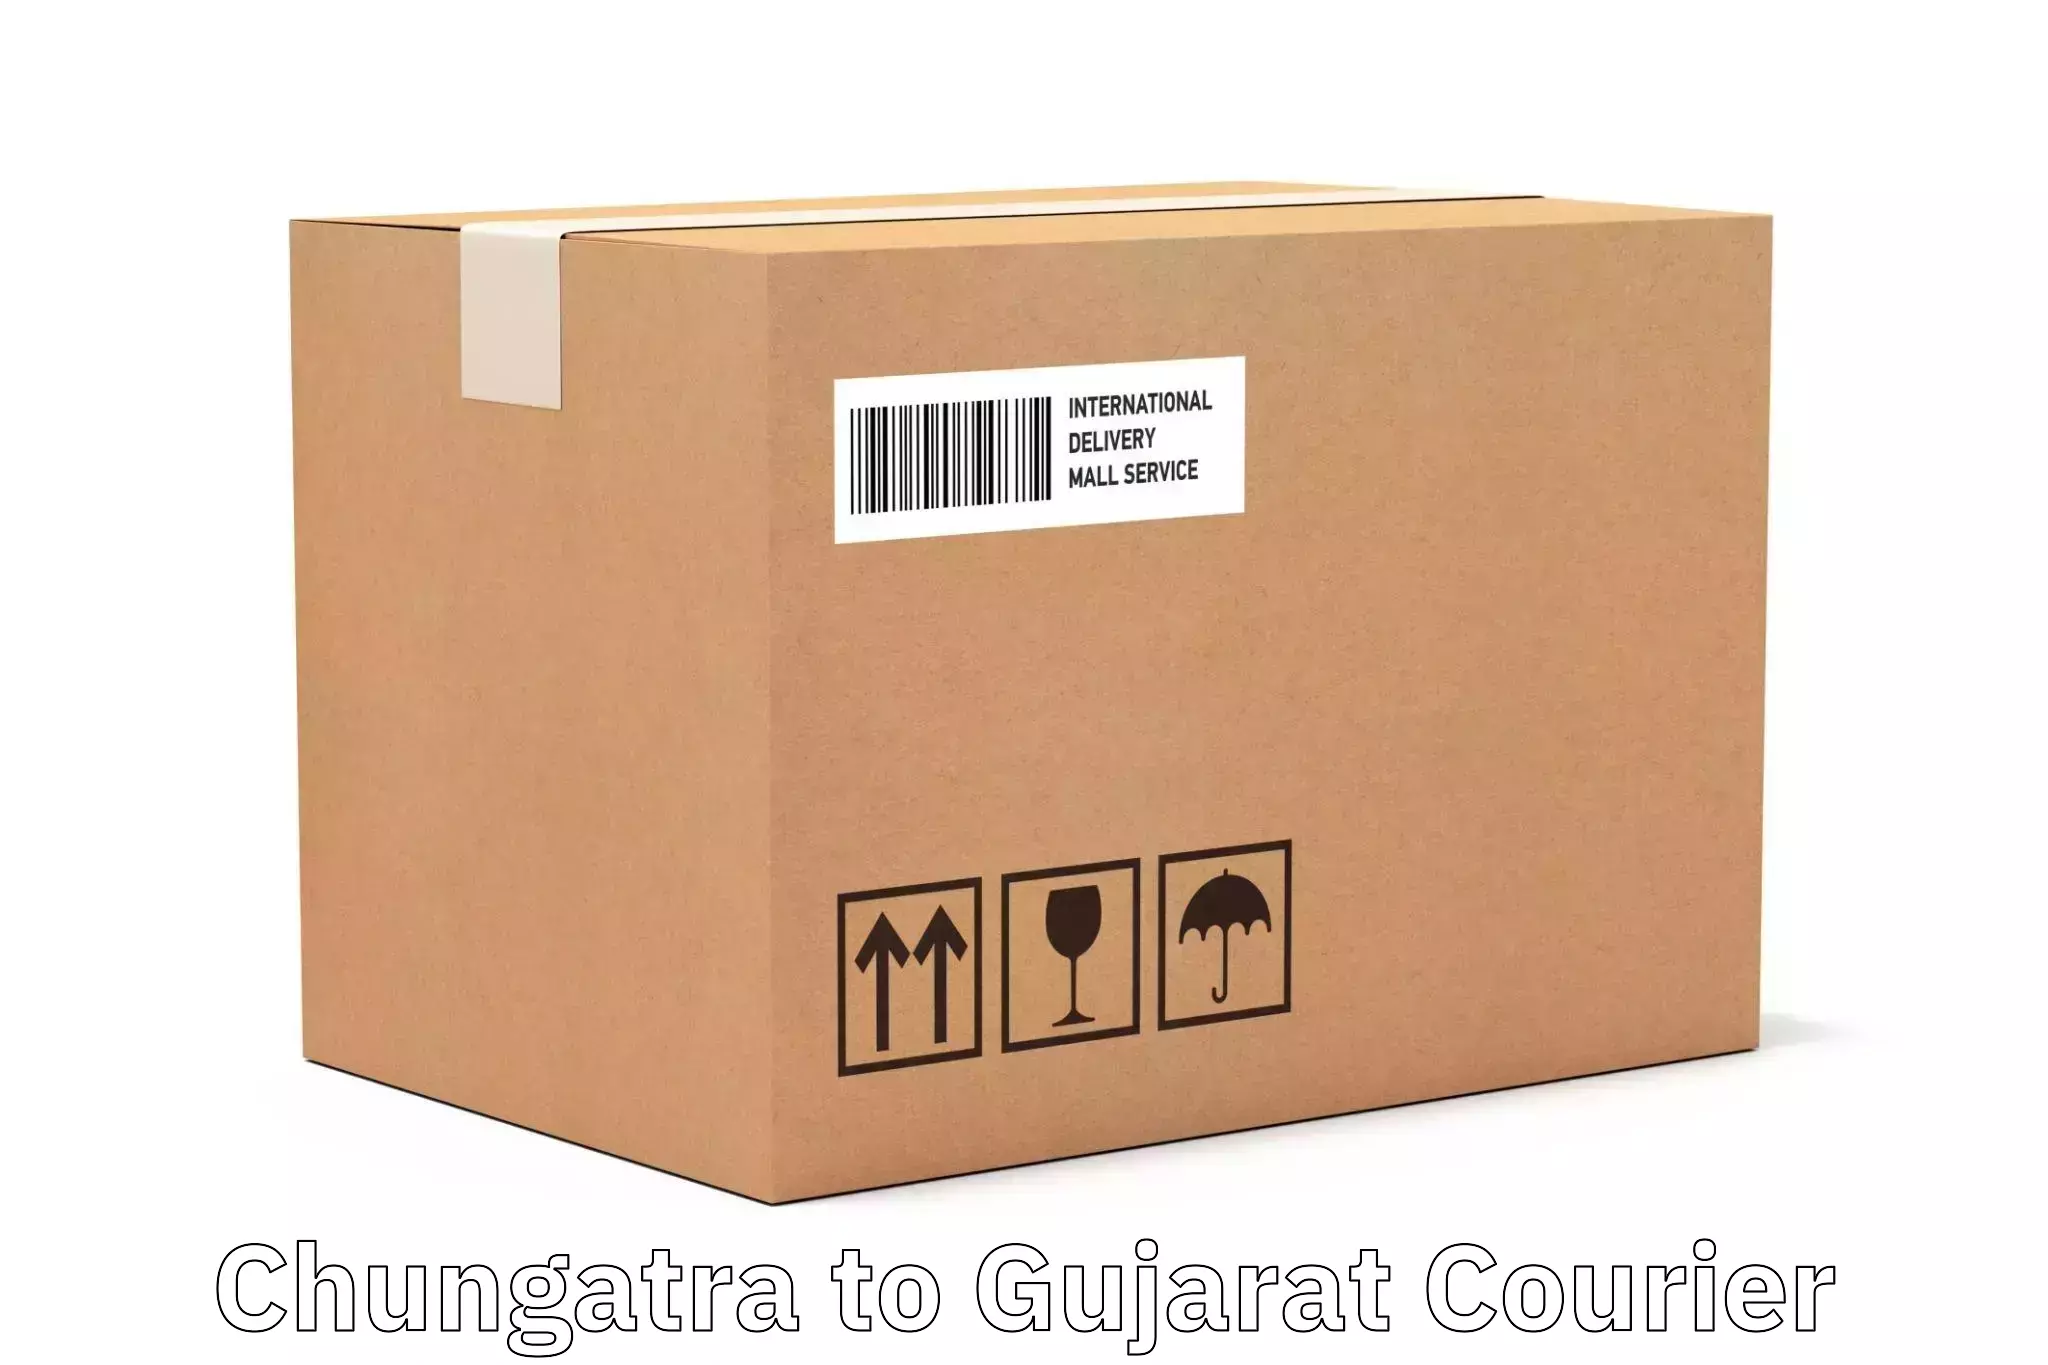 Online shipping calculator Chungatra to Gujarat